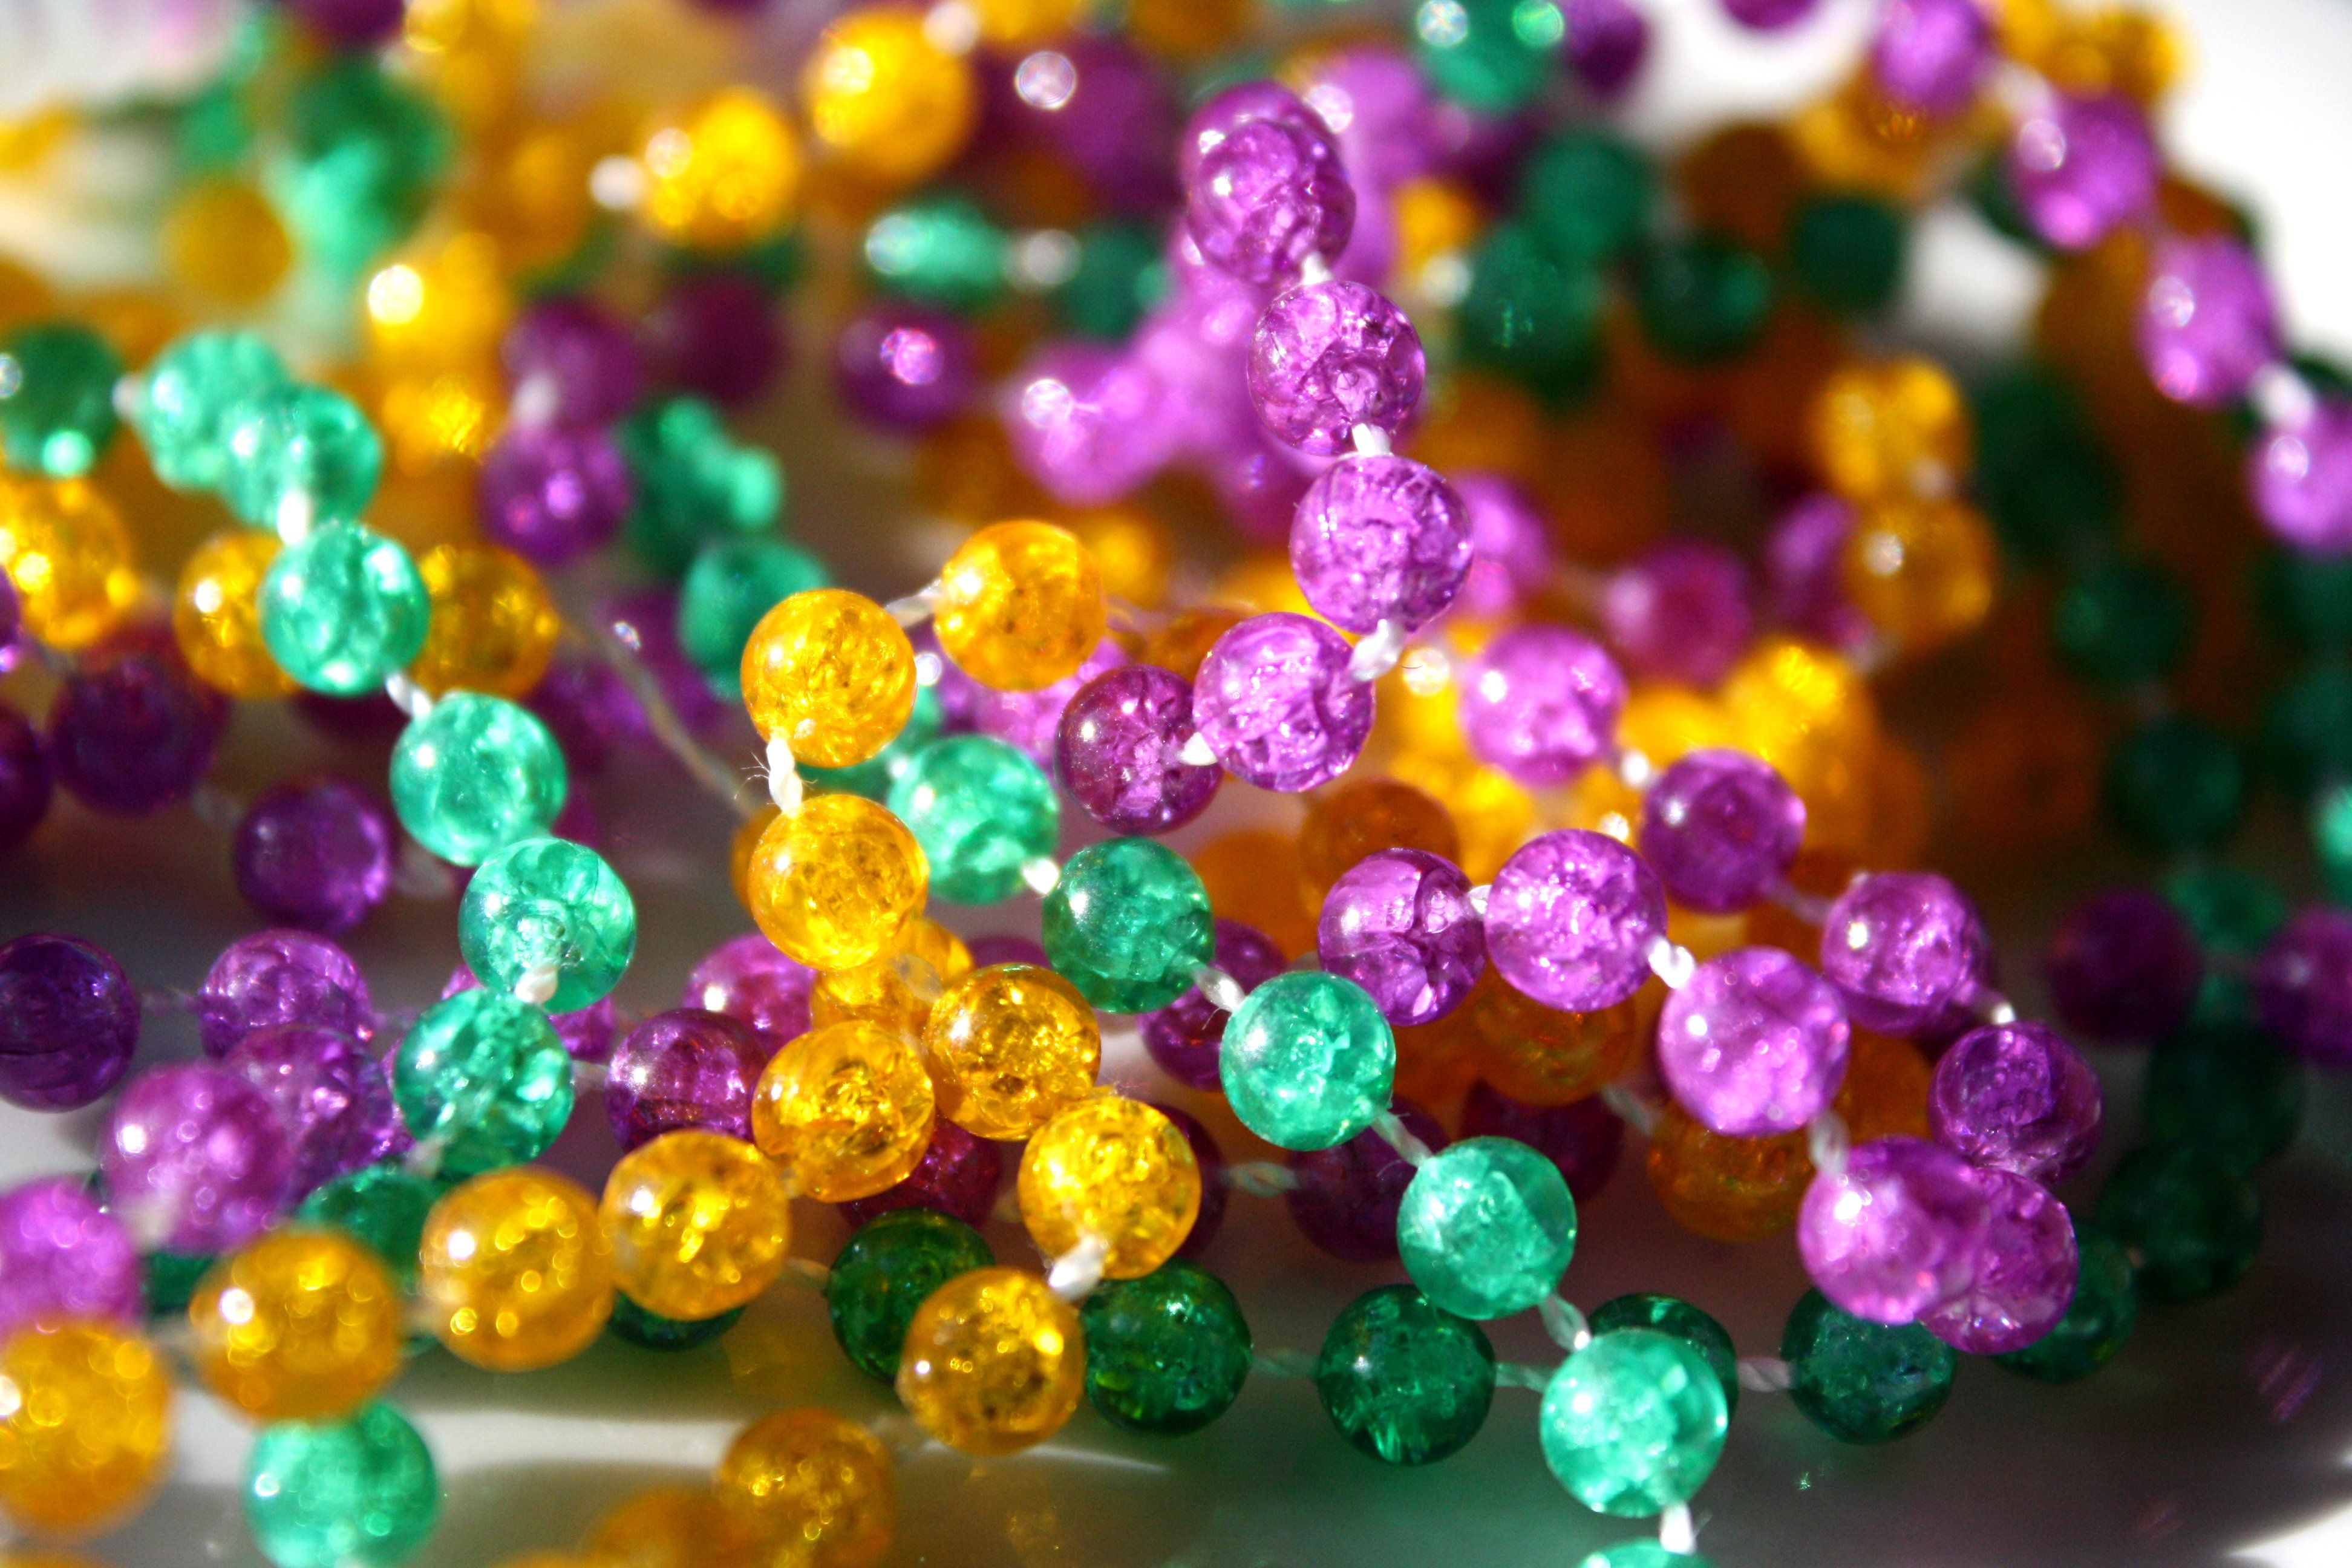 Mardi Gras Beads Closeup Picture. Free Photograph. Photo Public